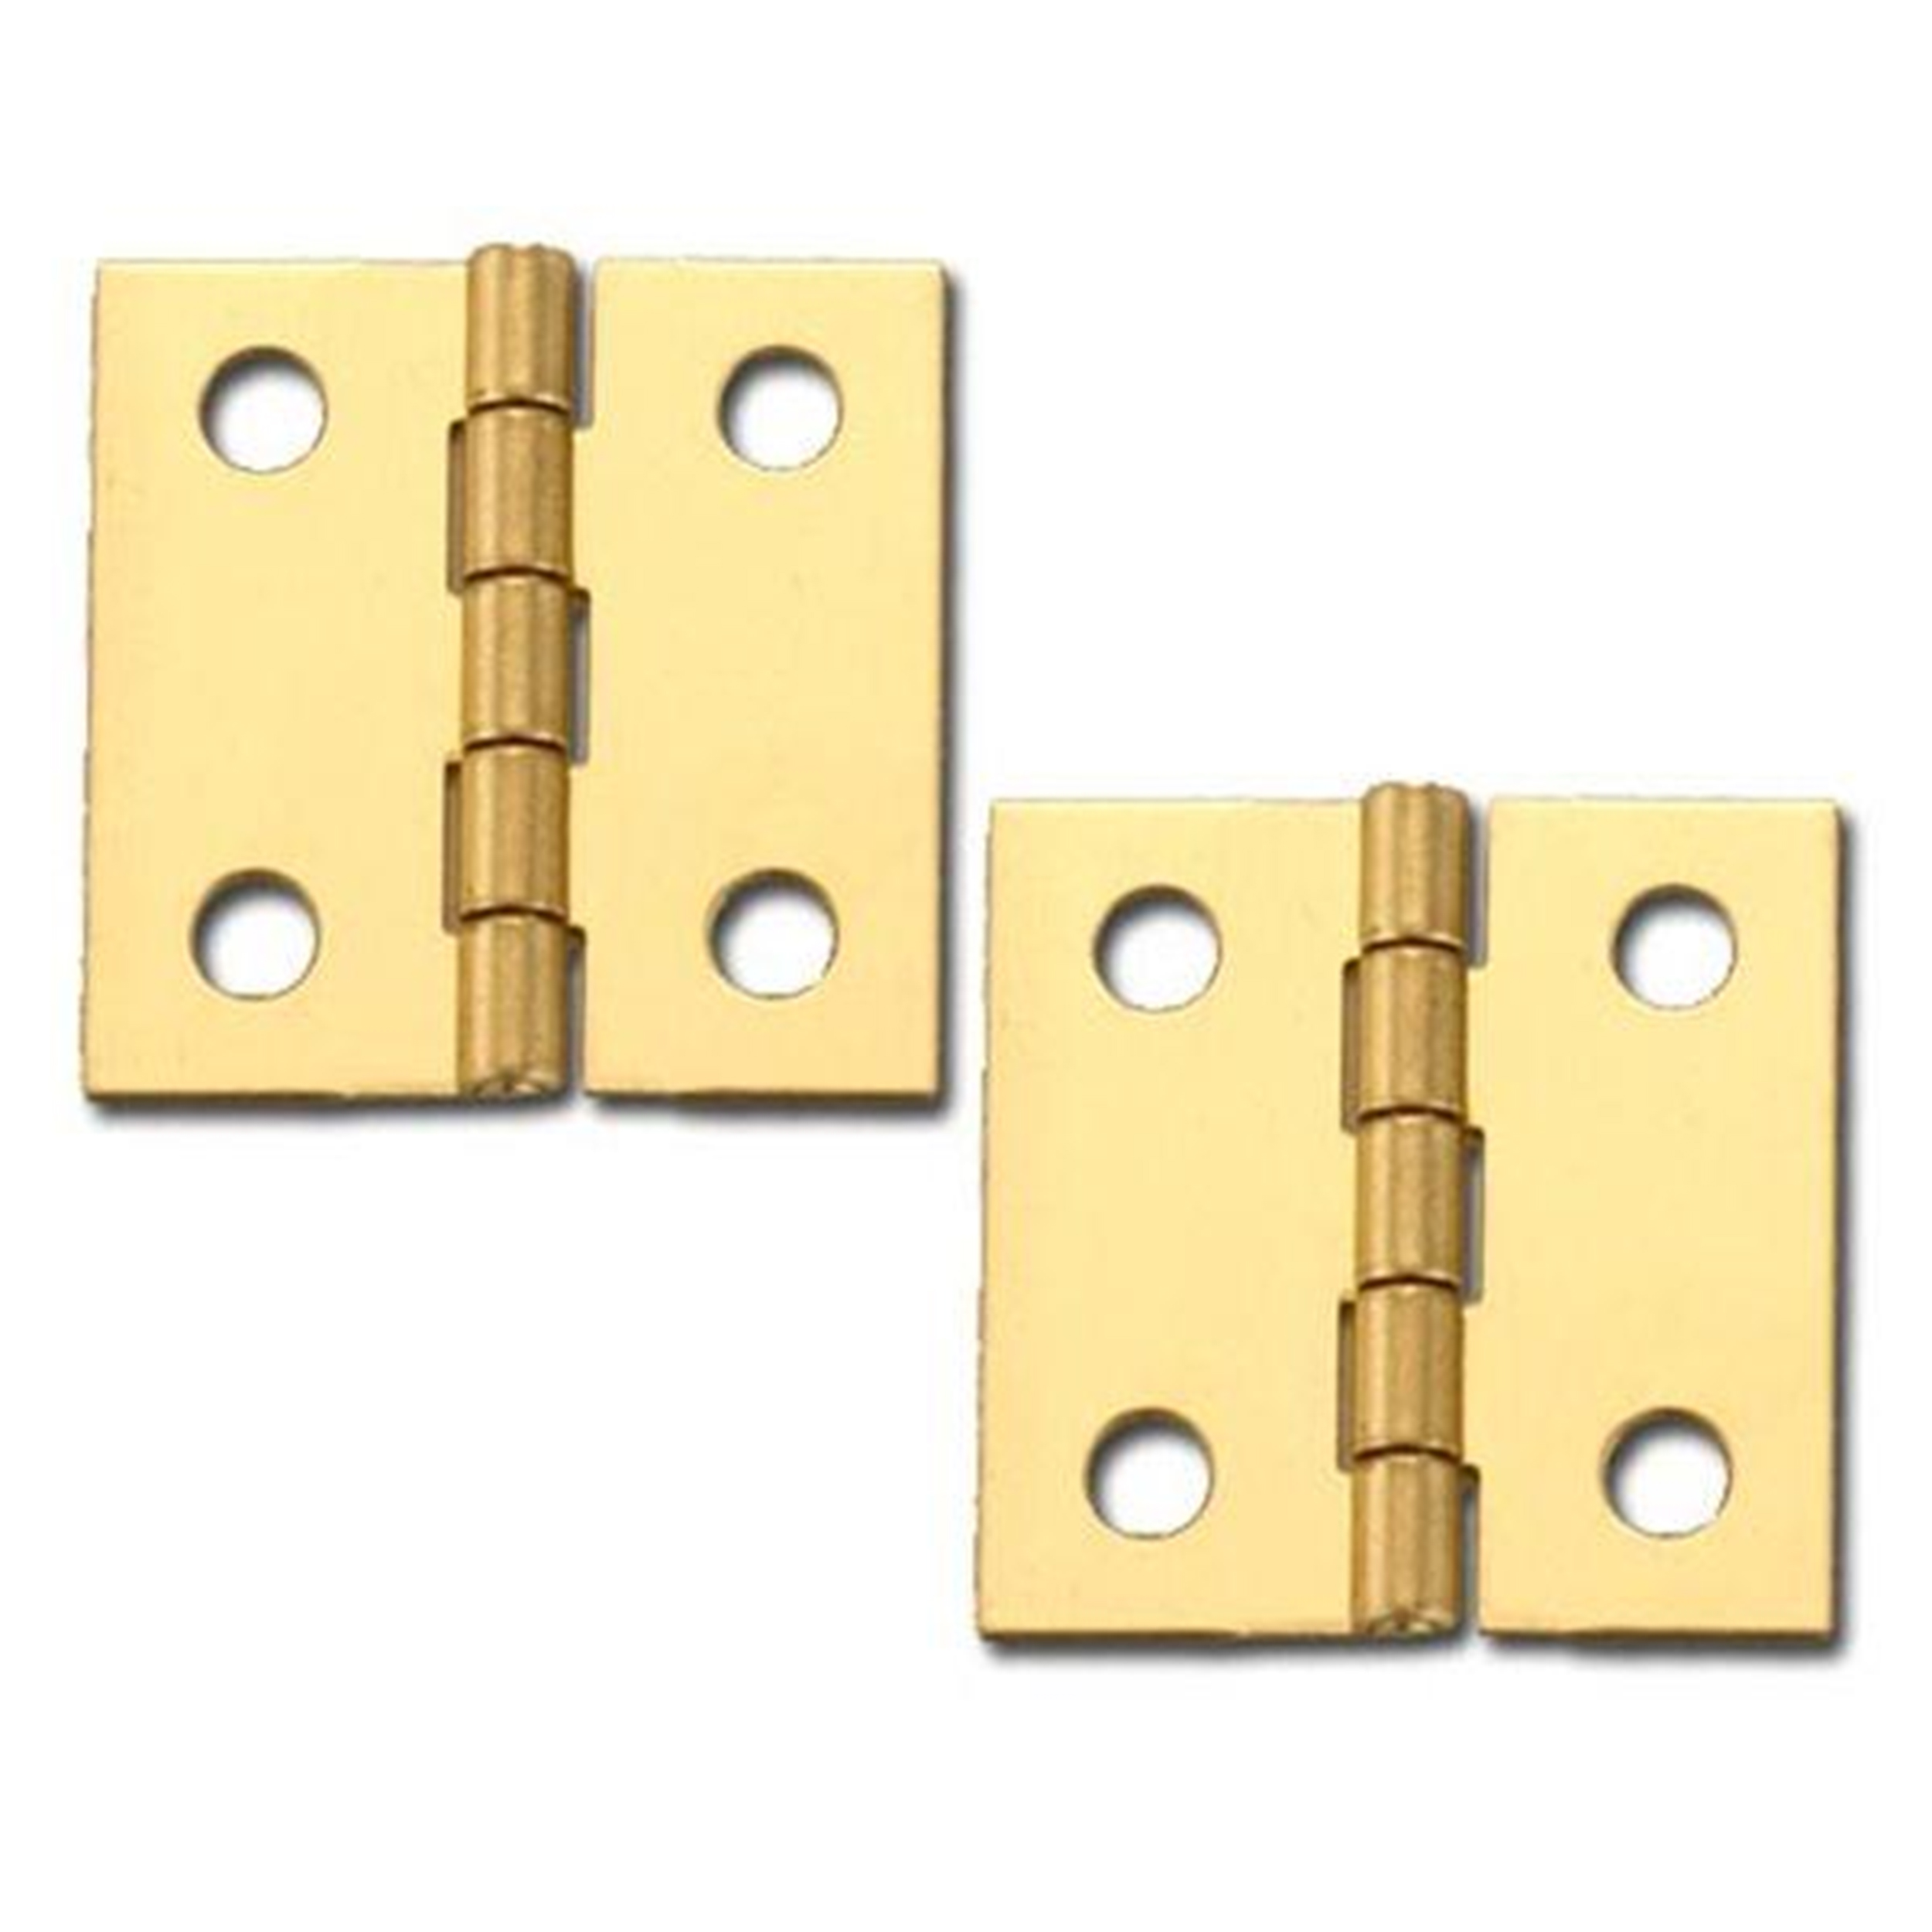 Solid Brass Miniature Broad Hinge1" Long X 1" Open W/screws, Pair